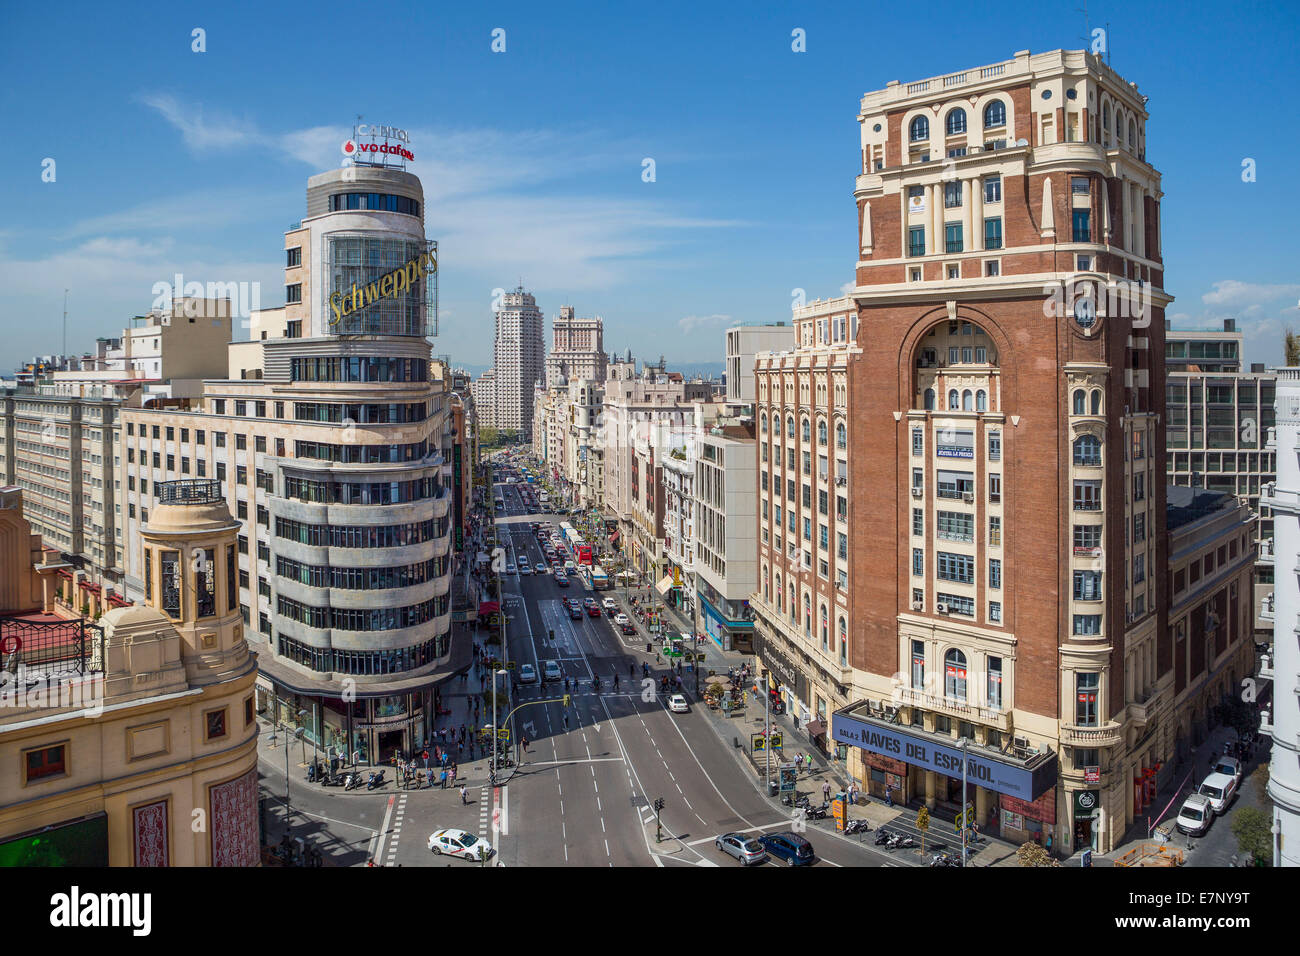 Avenue, Callao, City, Gran Via, Madrid, Spain, Europe, Square, architecture, downtown, modernism, tourism, travel Stock Photo